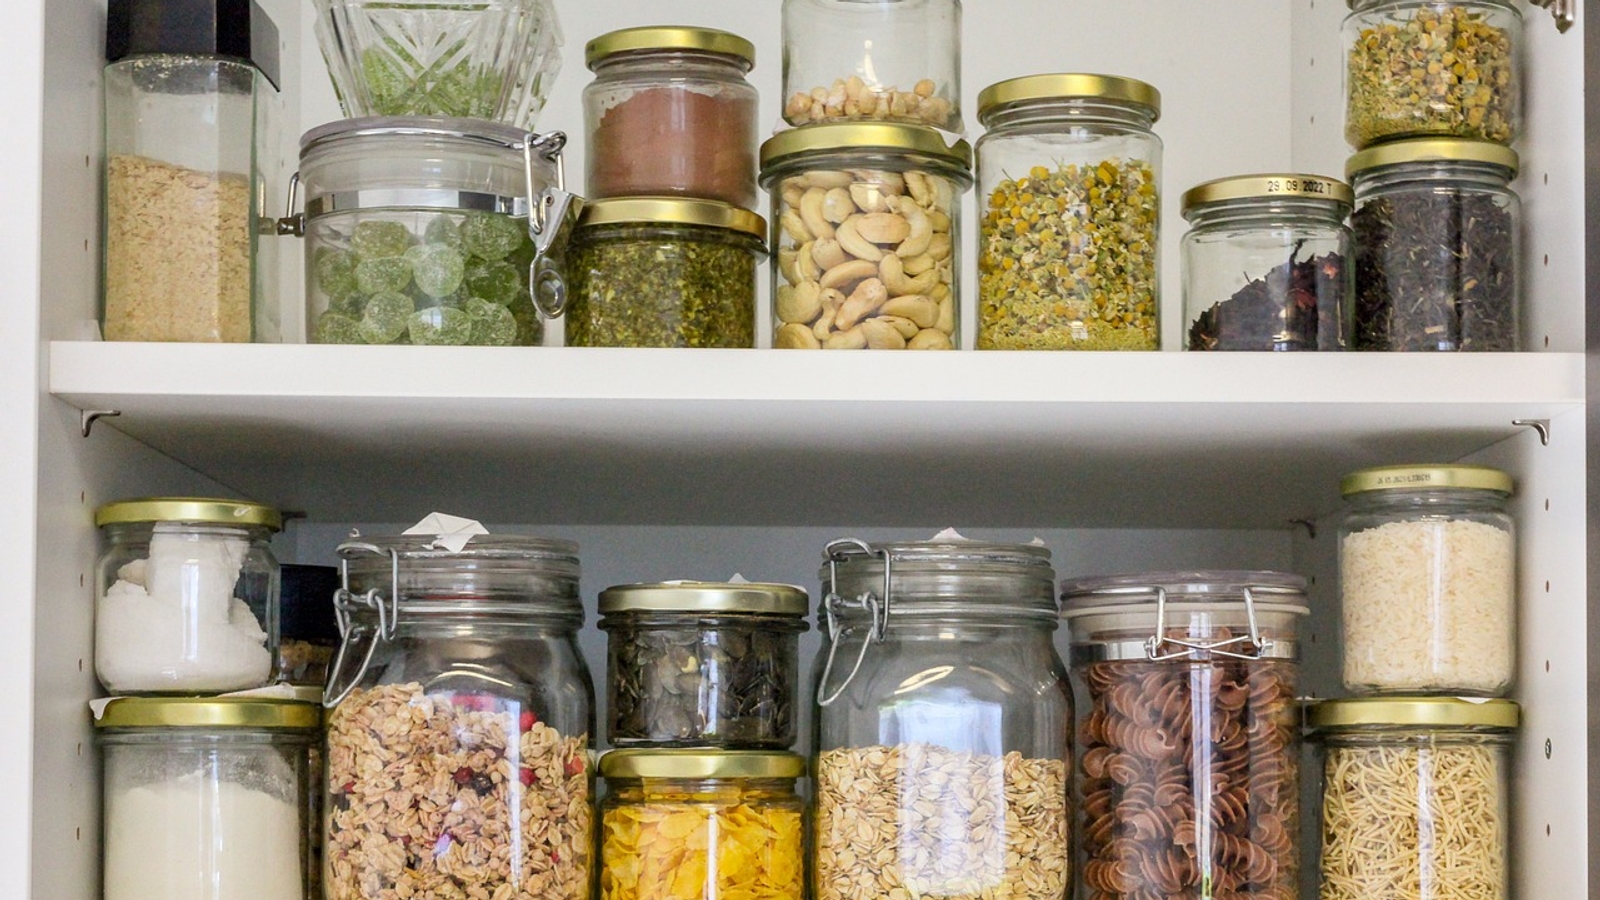 Zero waste cupboard pantry shelves with food in jars